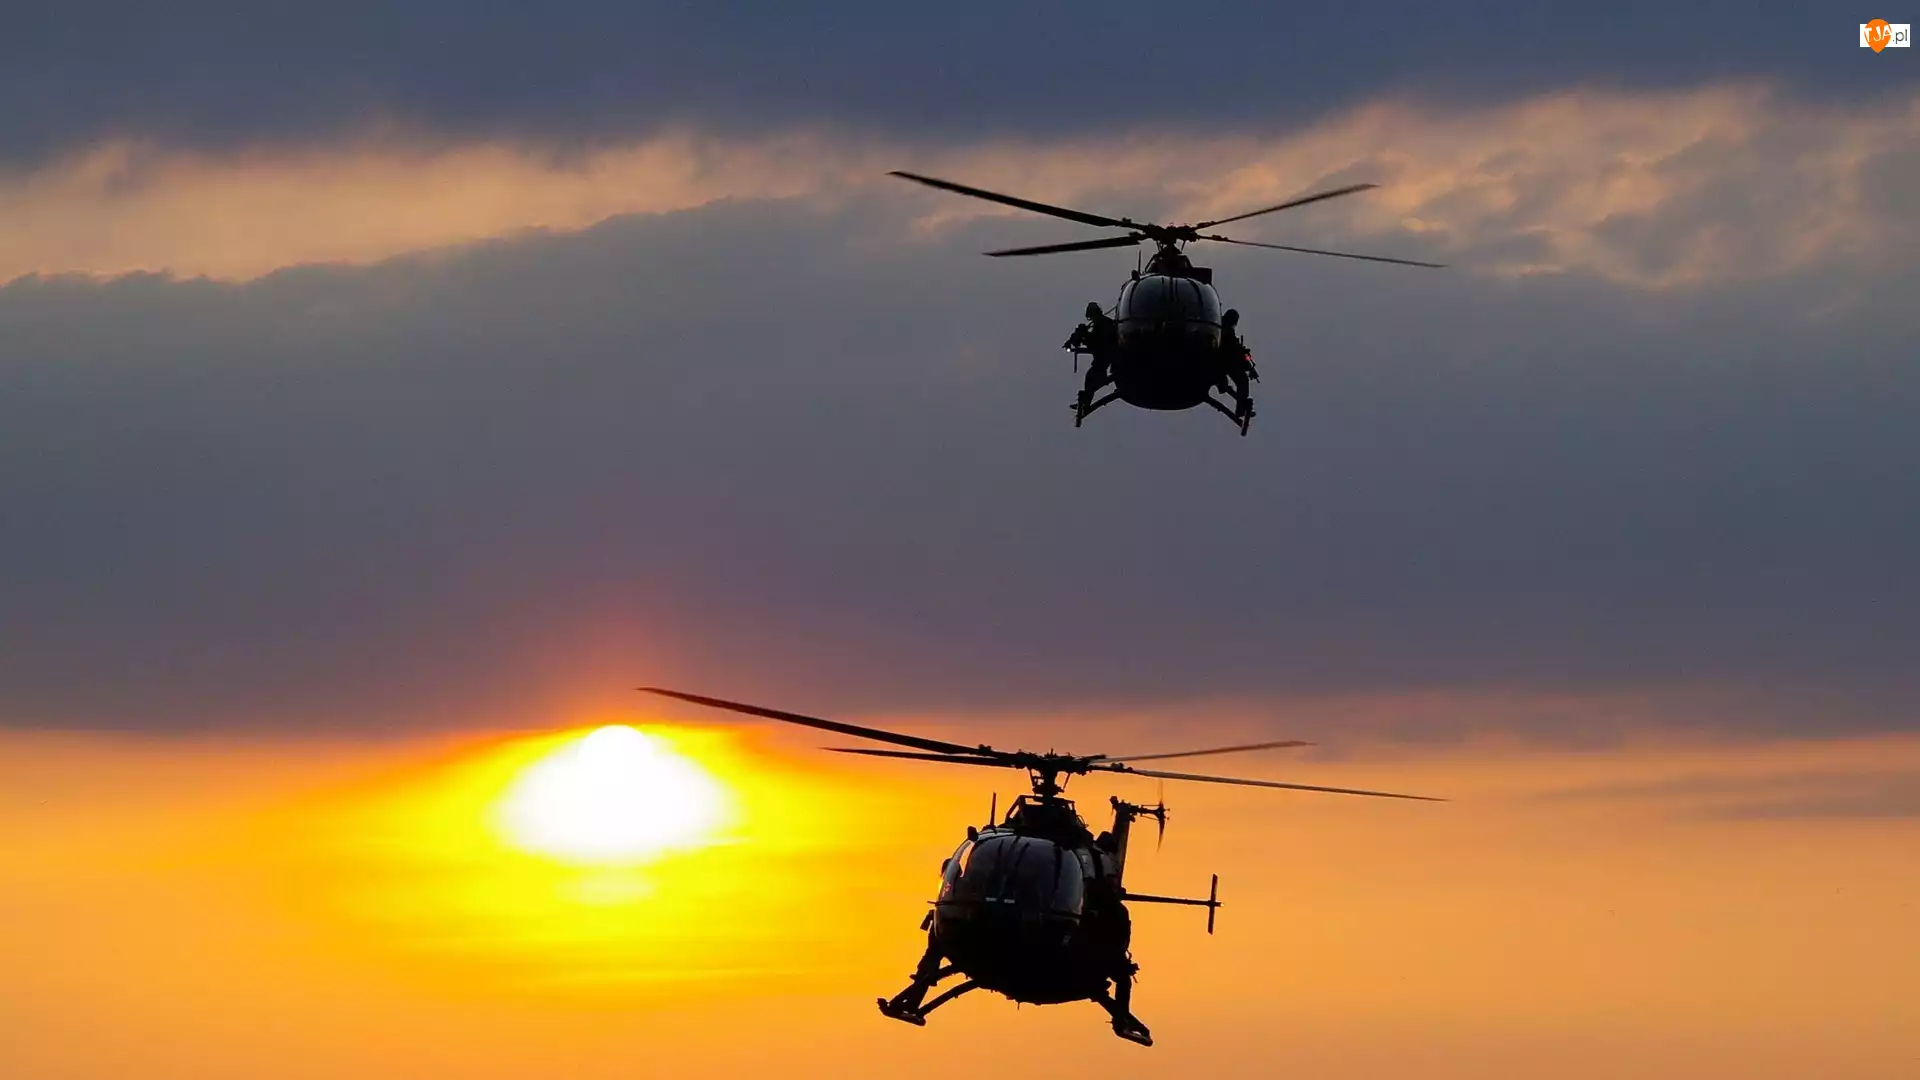 Słońca, Helikoptery, Zachód